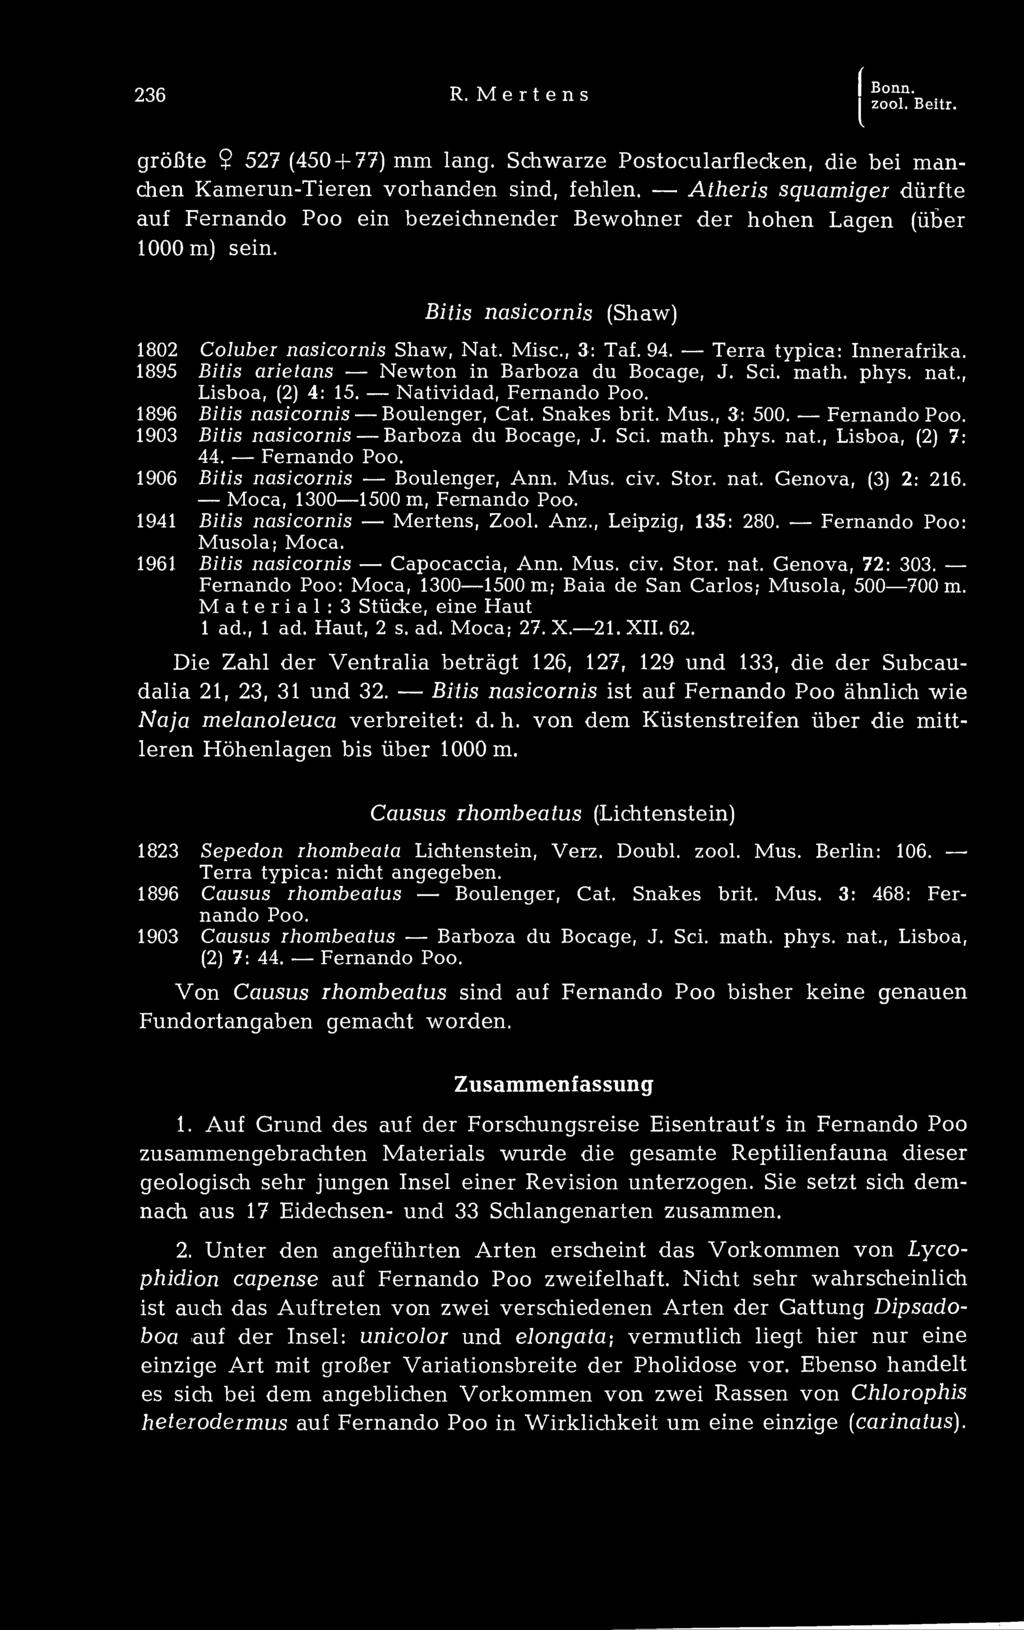 Terra typica: Innerafrika. 1895 Bitis arietans Newton in Barboza du Bocage, J. Sei. math. phys. nat., Lisboa, (2) 4: 15. Natividad, Fernando 1896 Bitis nasicornis Boulenger, Cat. Snakes brit. Mus.